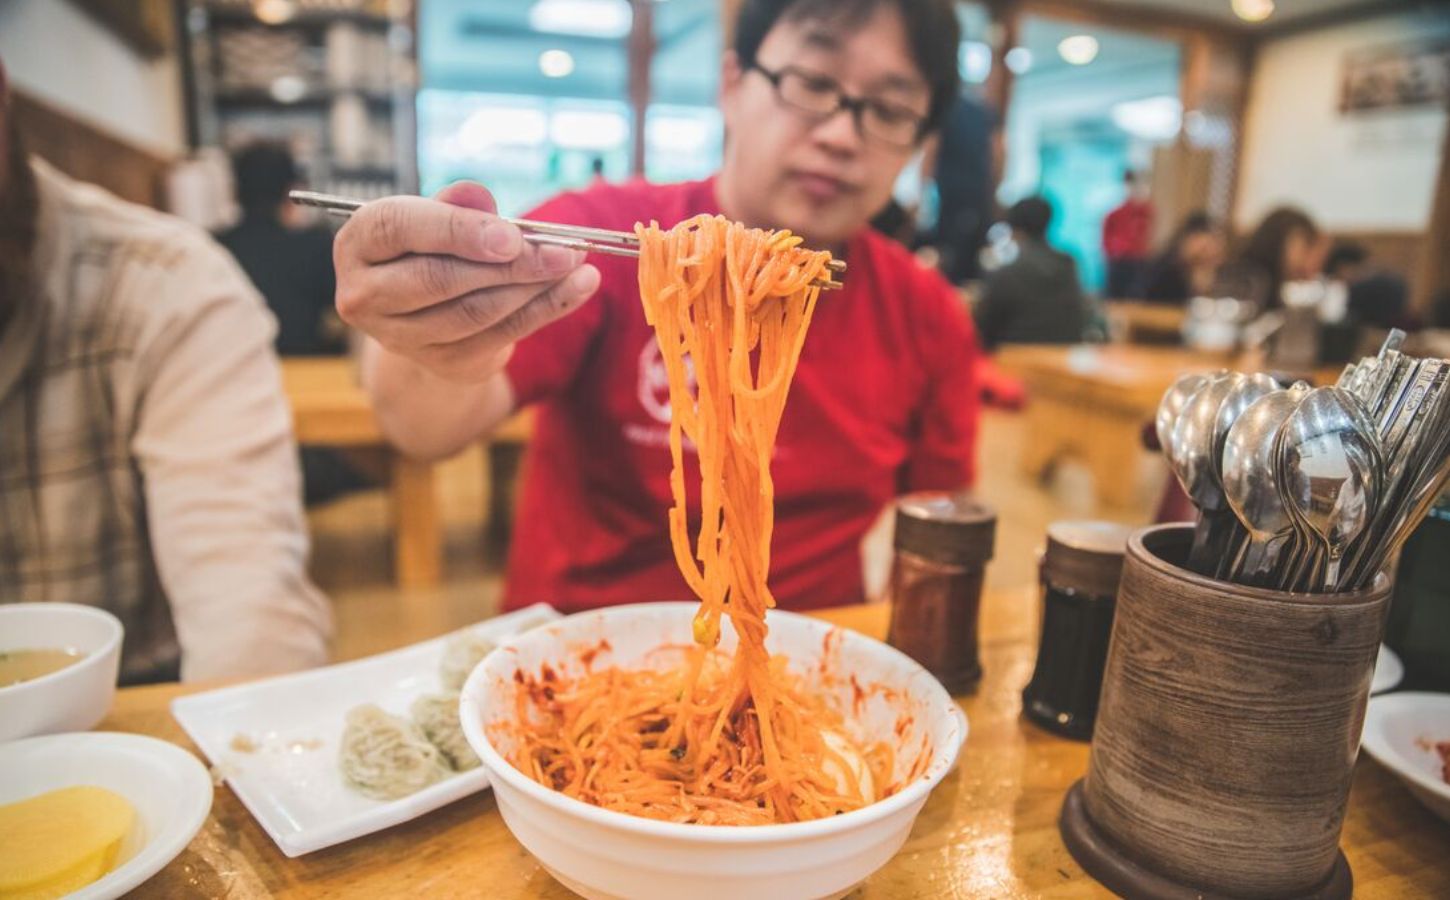 Photo shows a man holding up noodles over a bowl using chopsticks